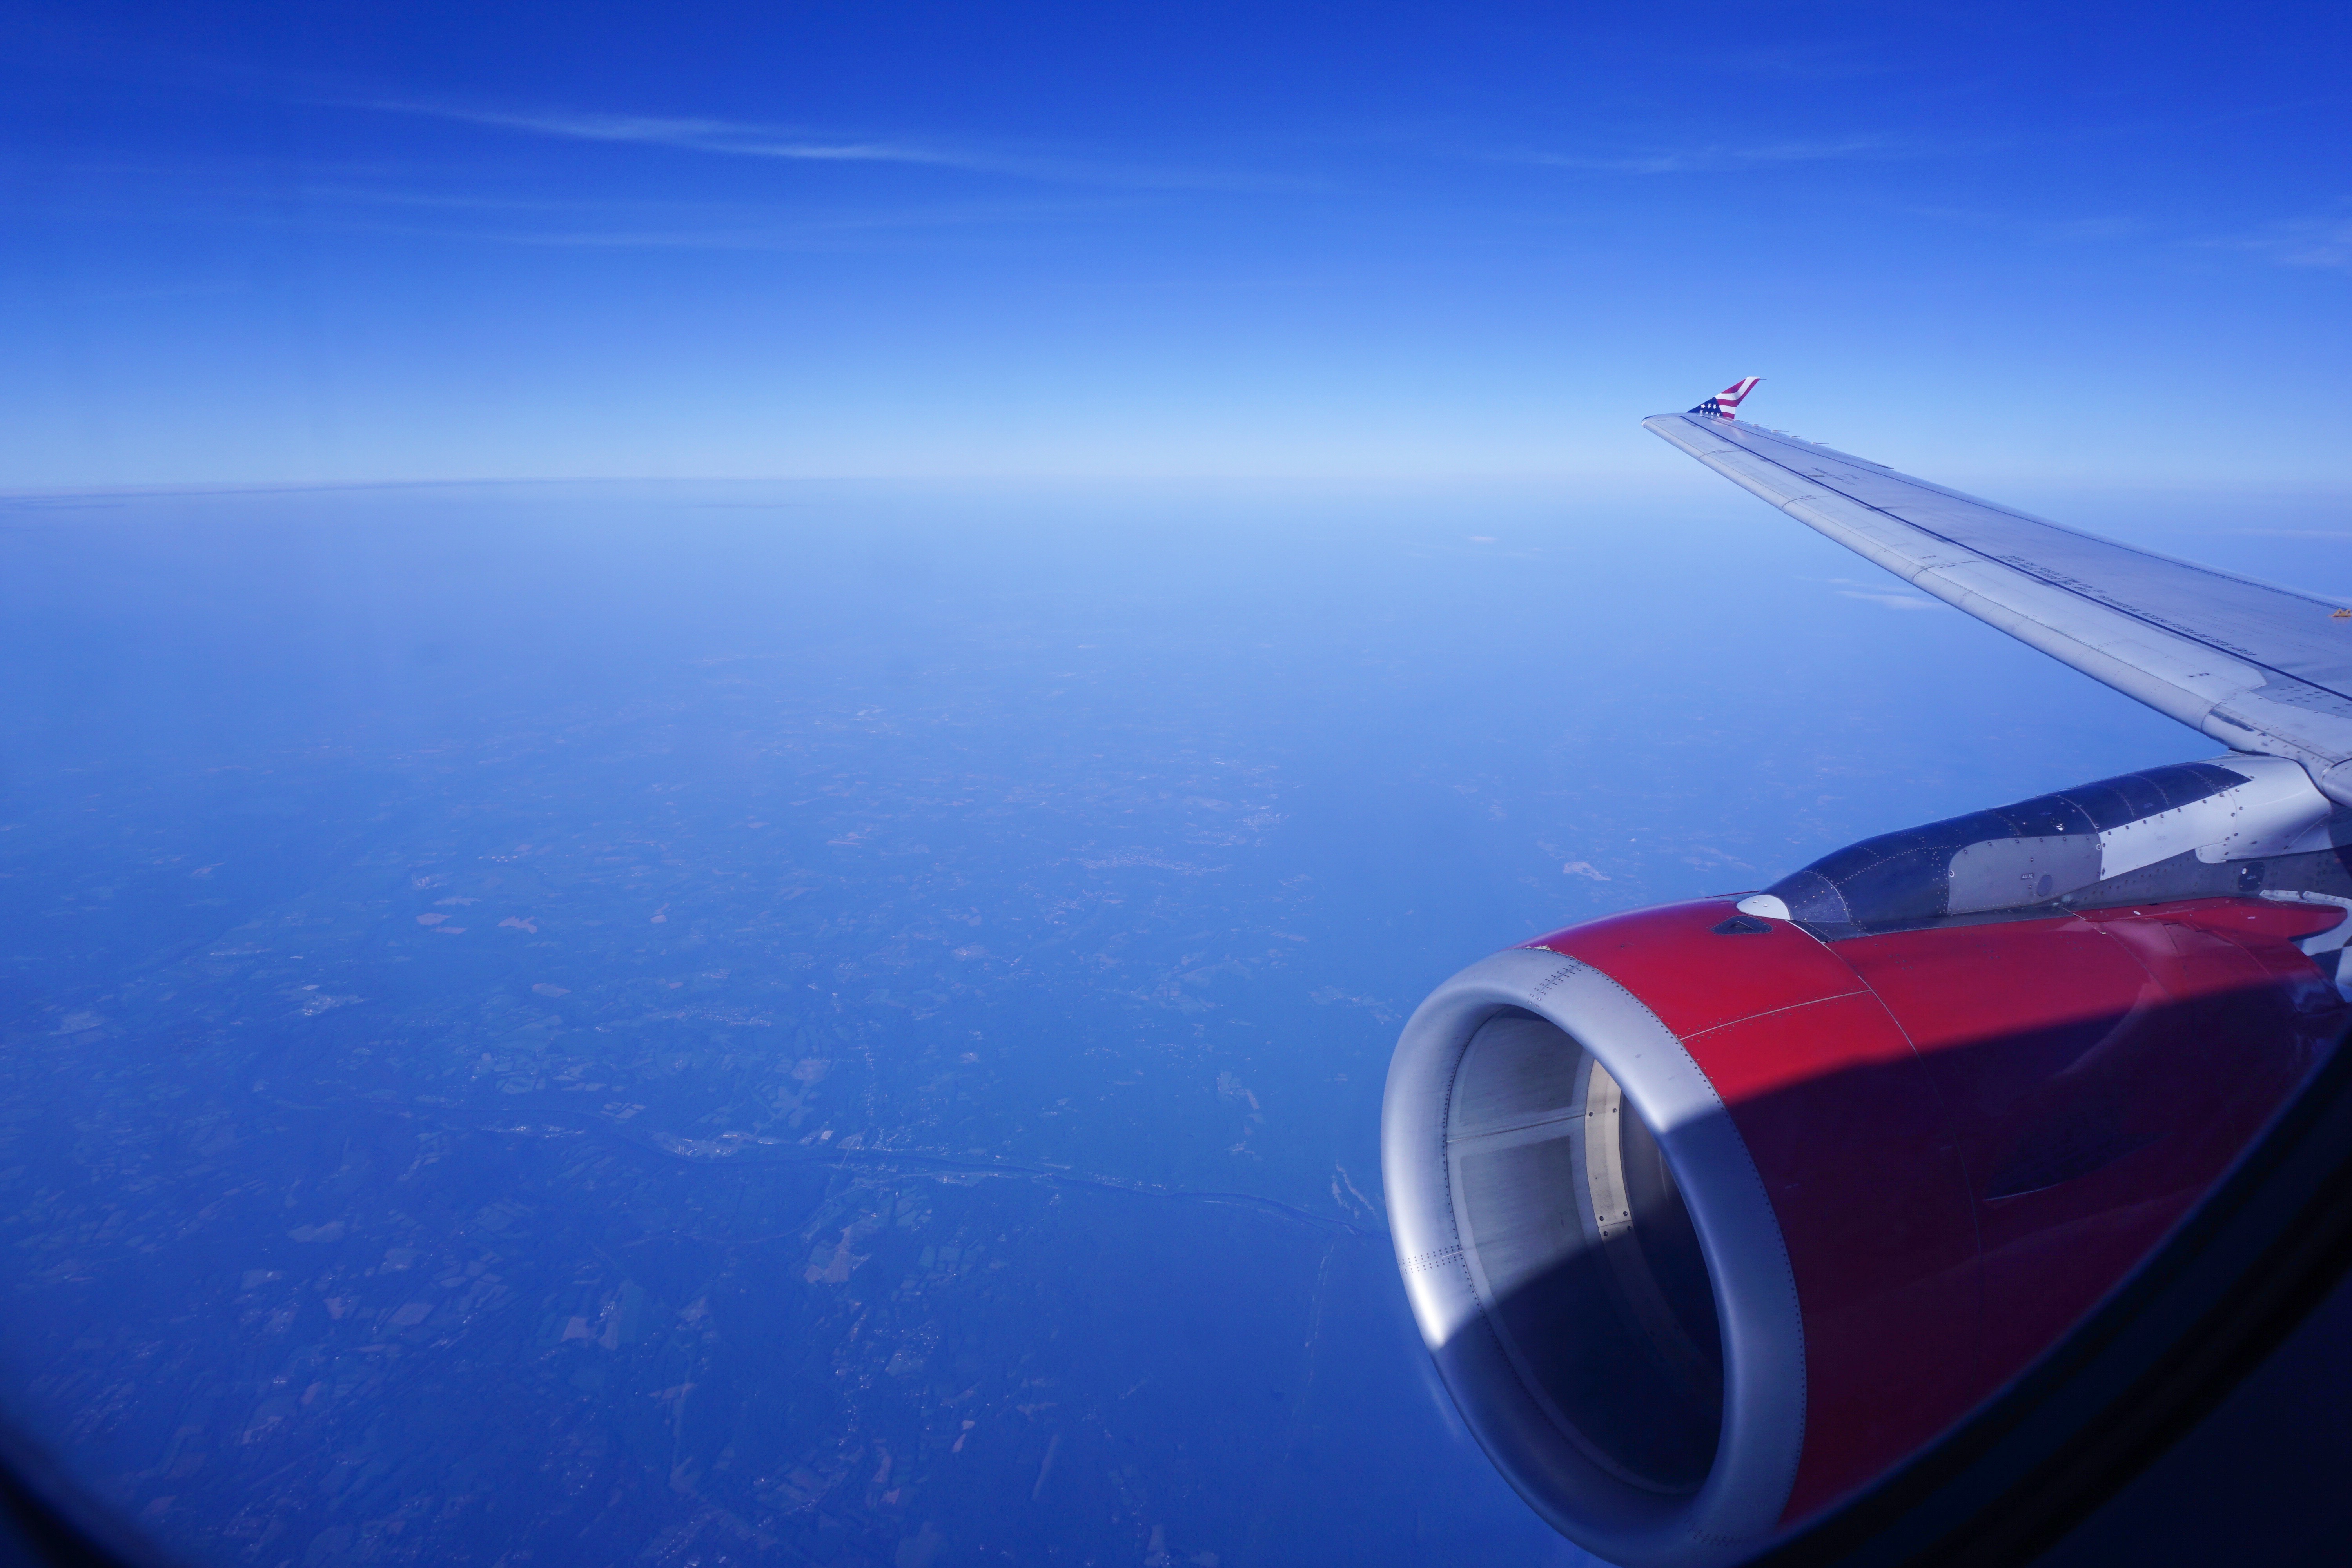 SFO-JFK-HKG-TAO-SHA УعС  Virgin America | Cathay Pacific